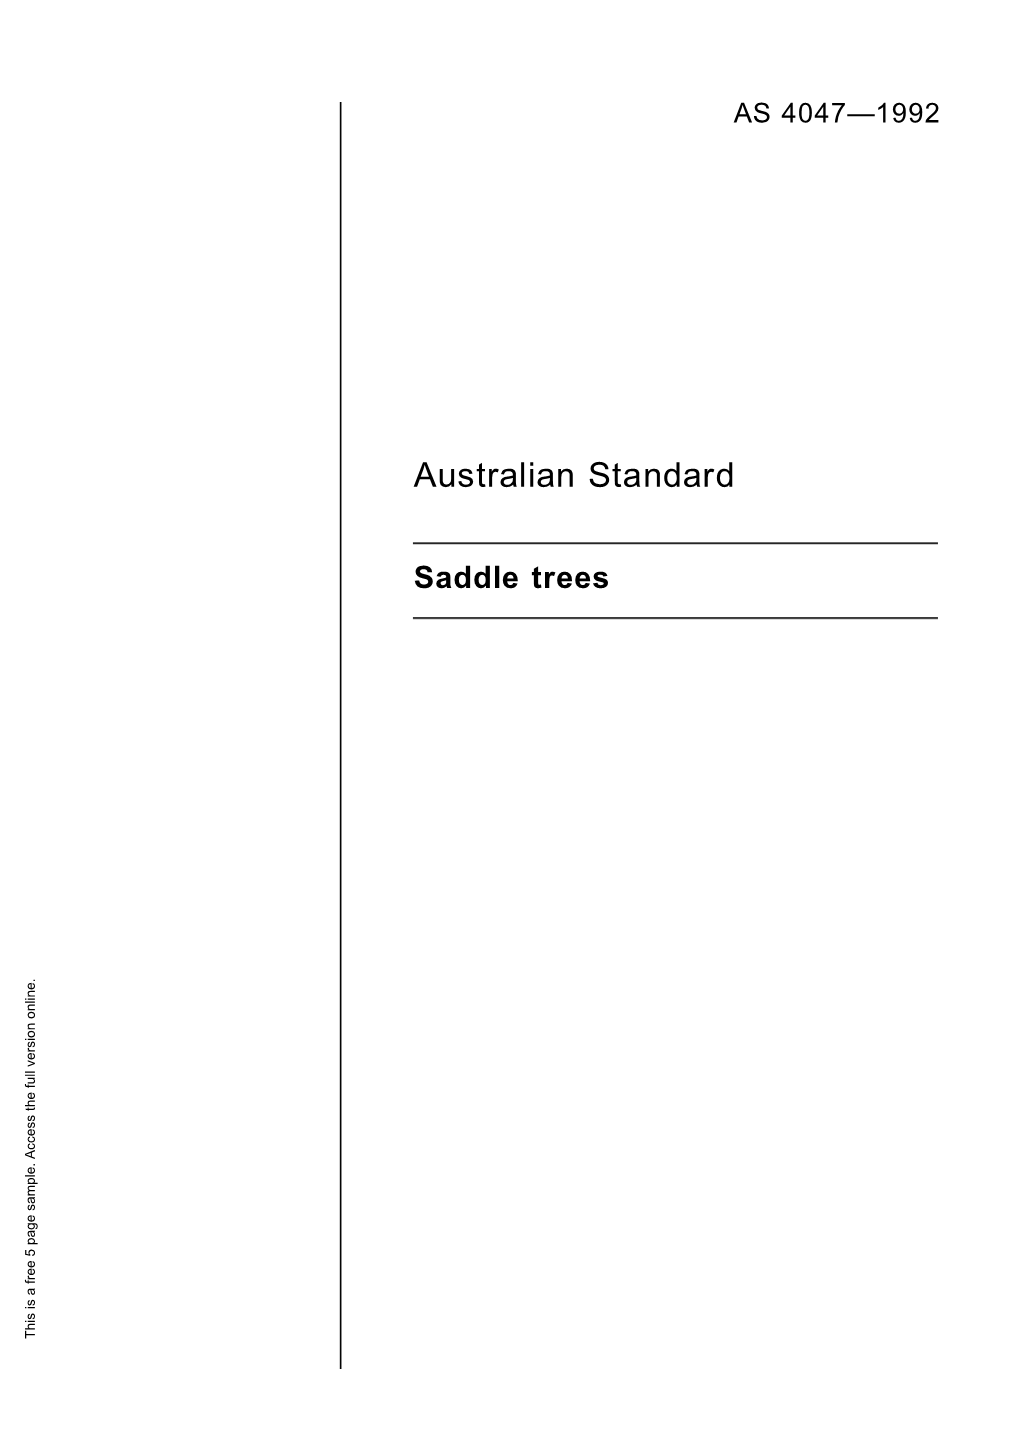 AS 4047-1992 Saddle Trees